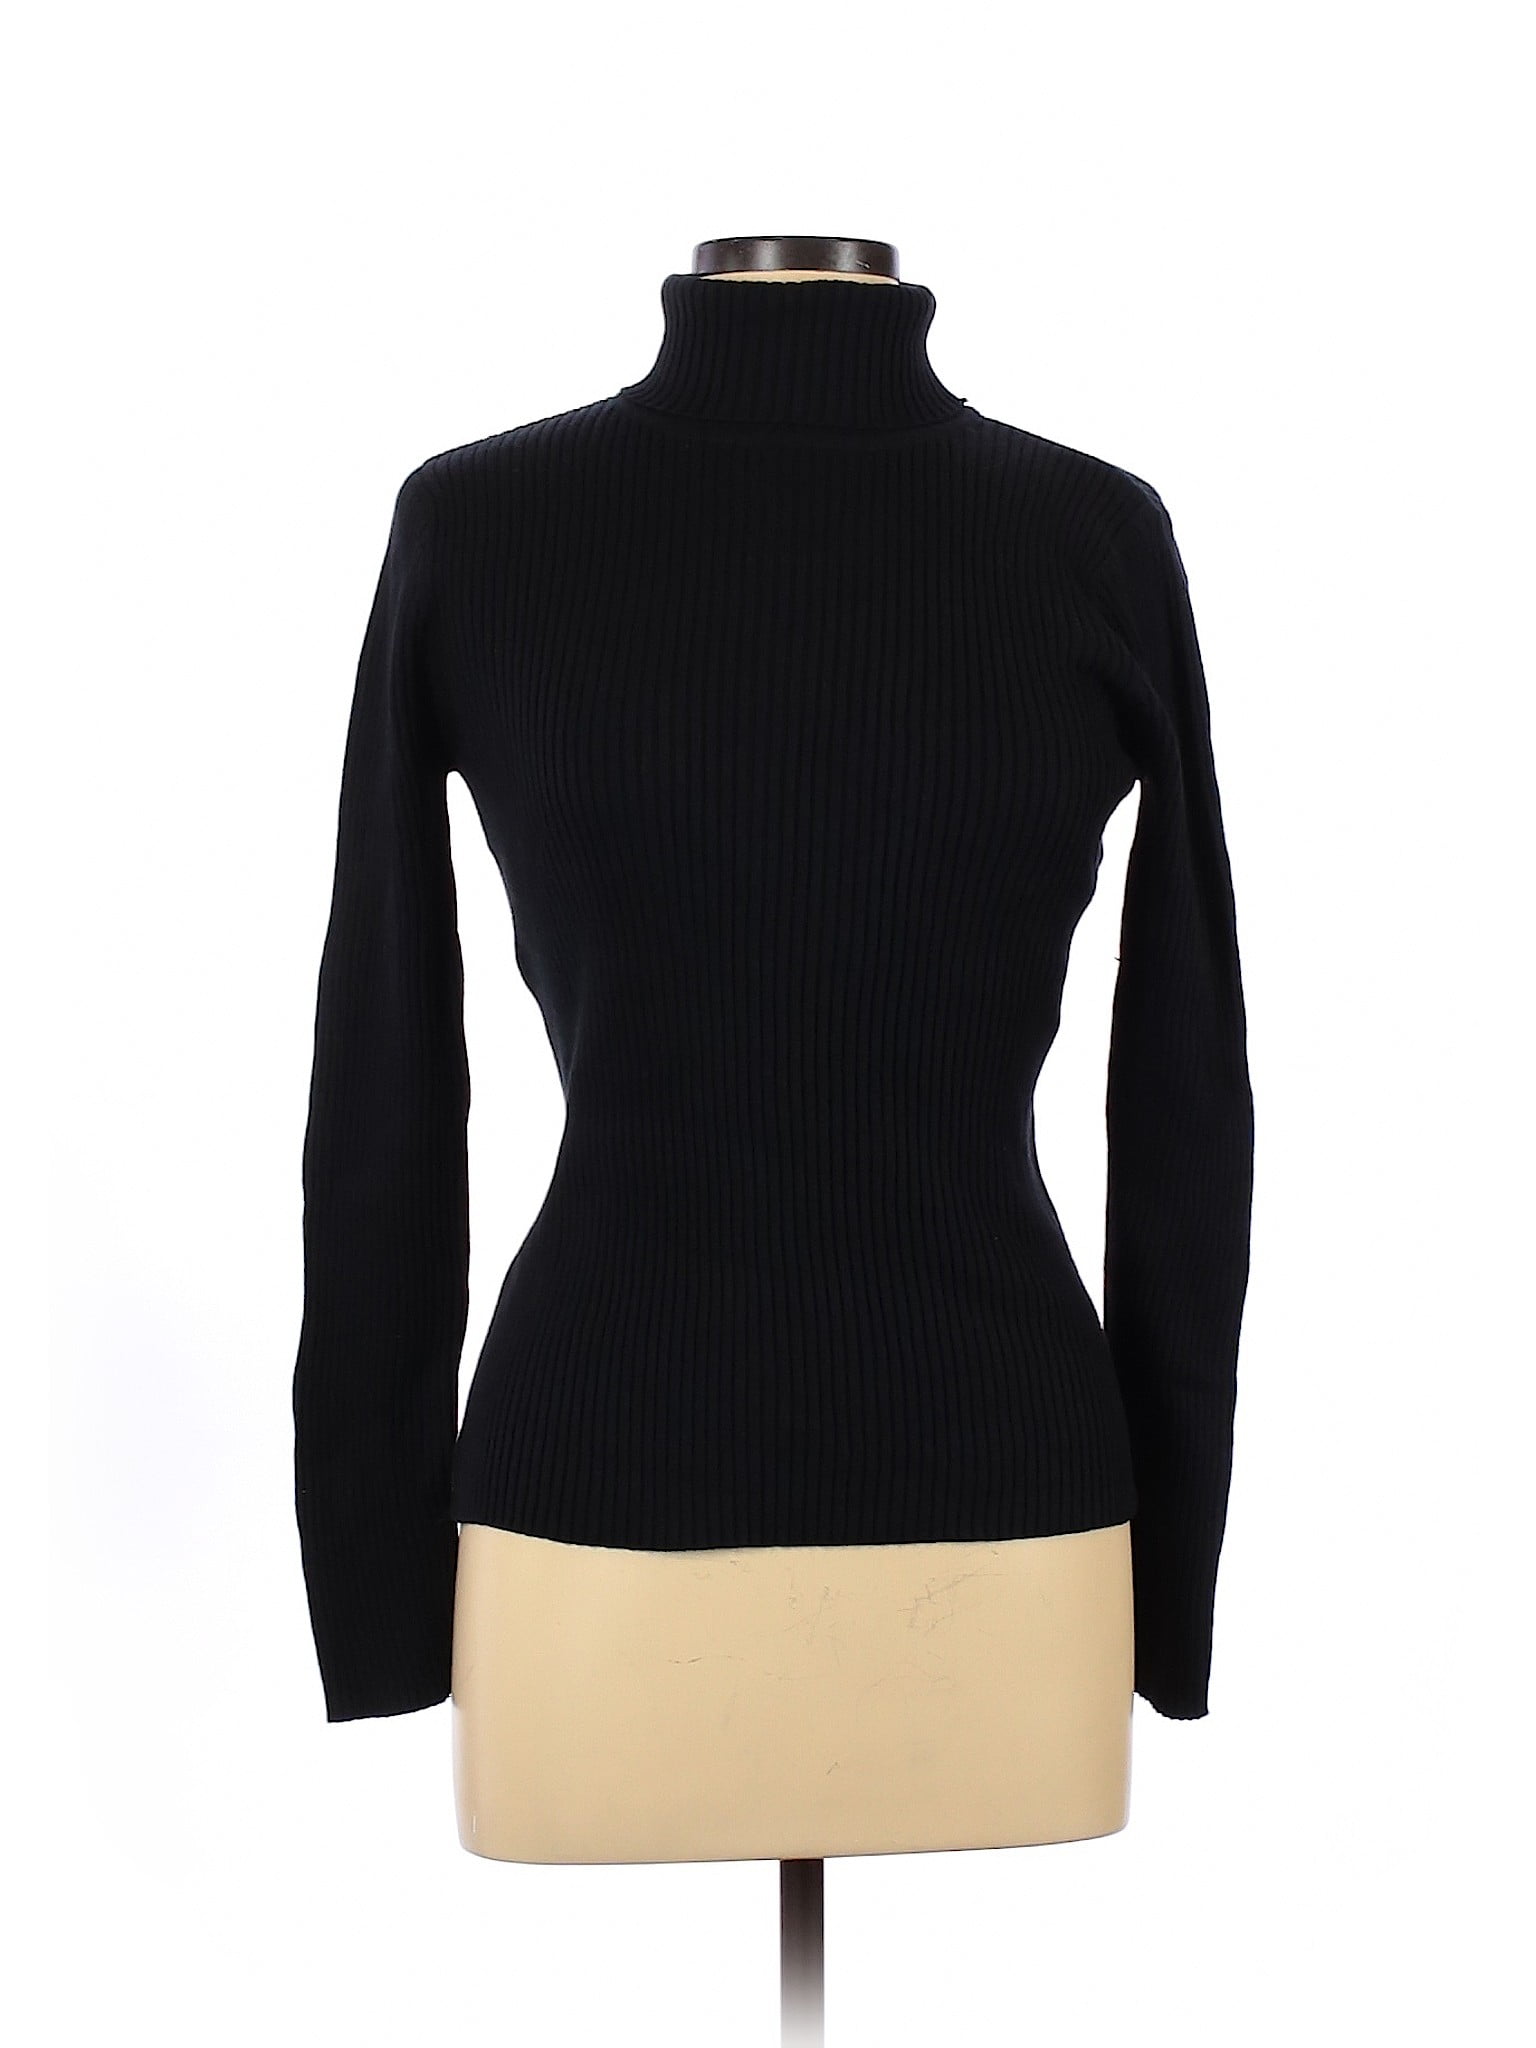 Newport News - Pre-Owned Newport News Women's Size L Turtleneck Sweater ...